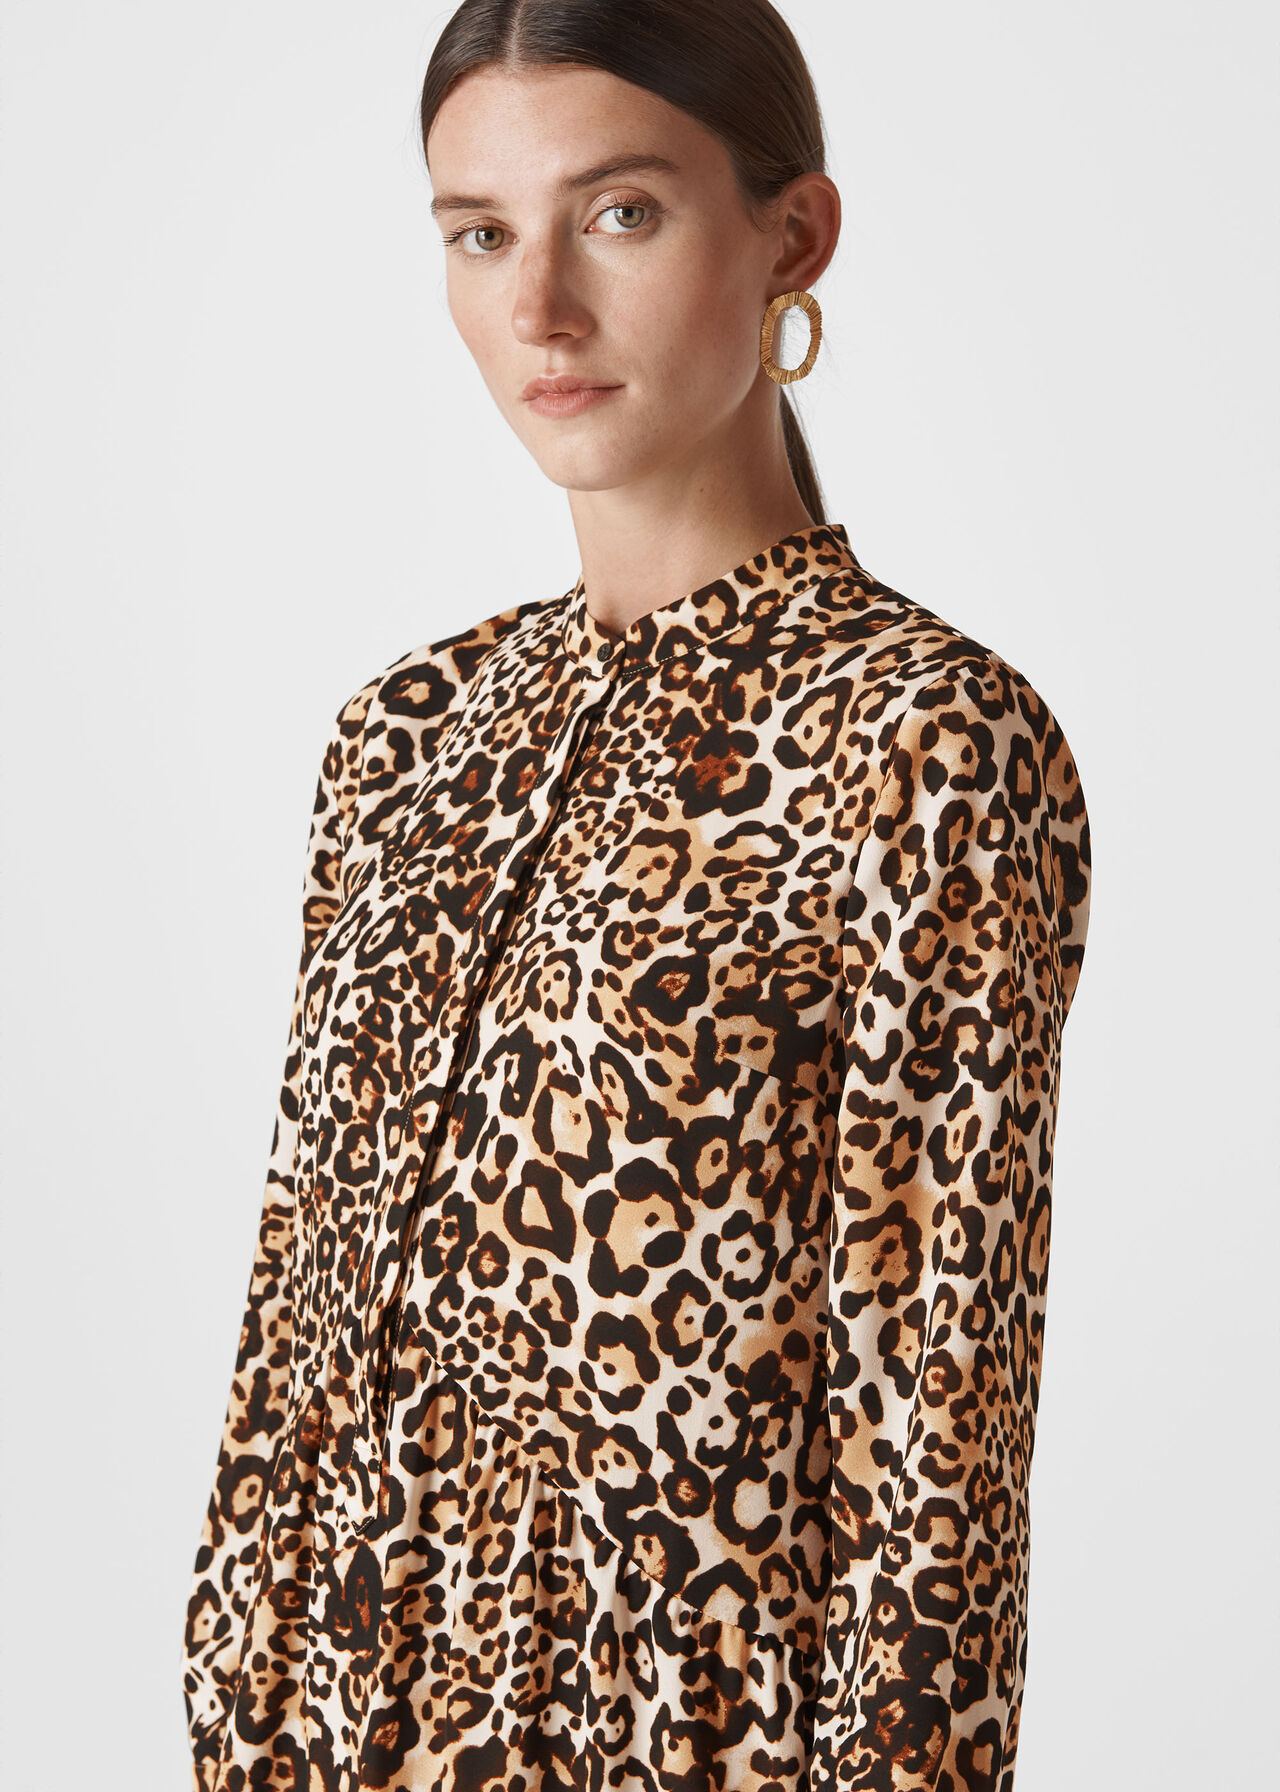 Animal Print Shirt Dress Leopard Print